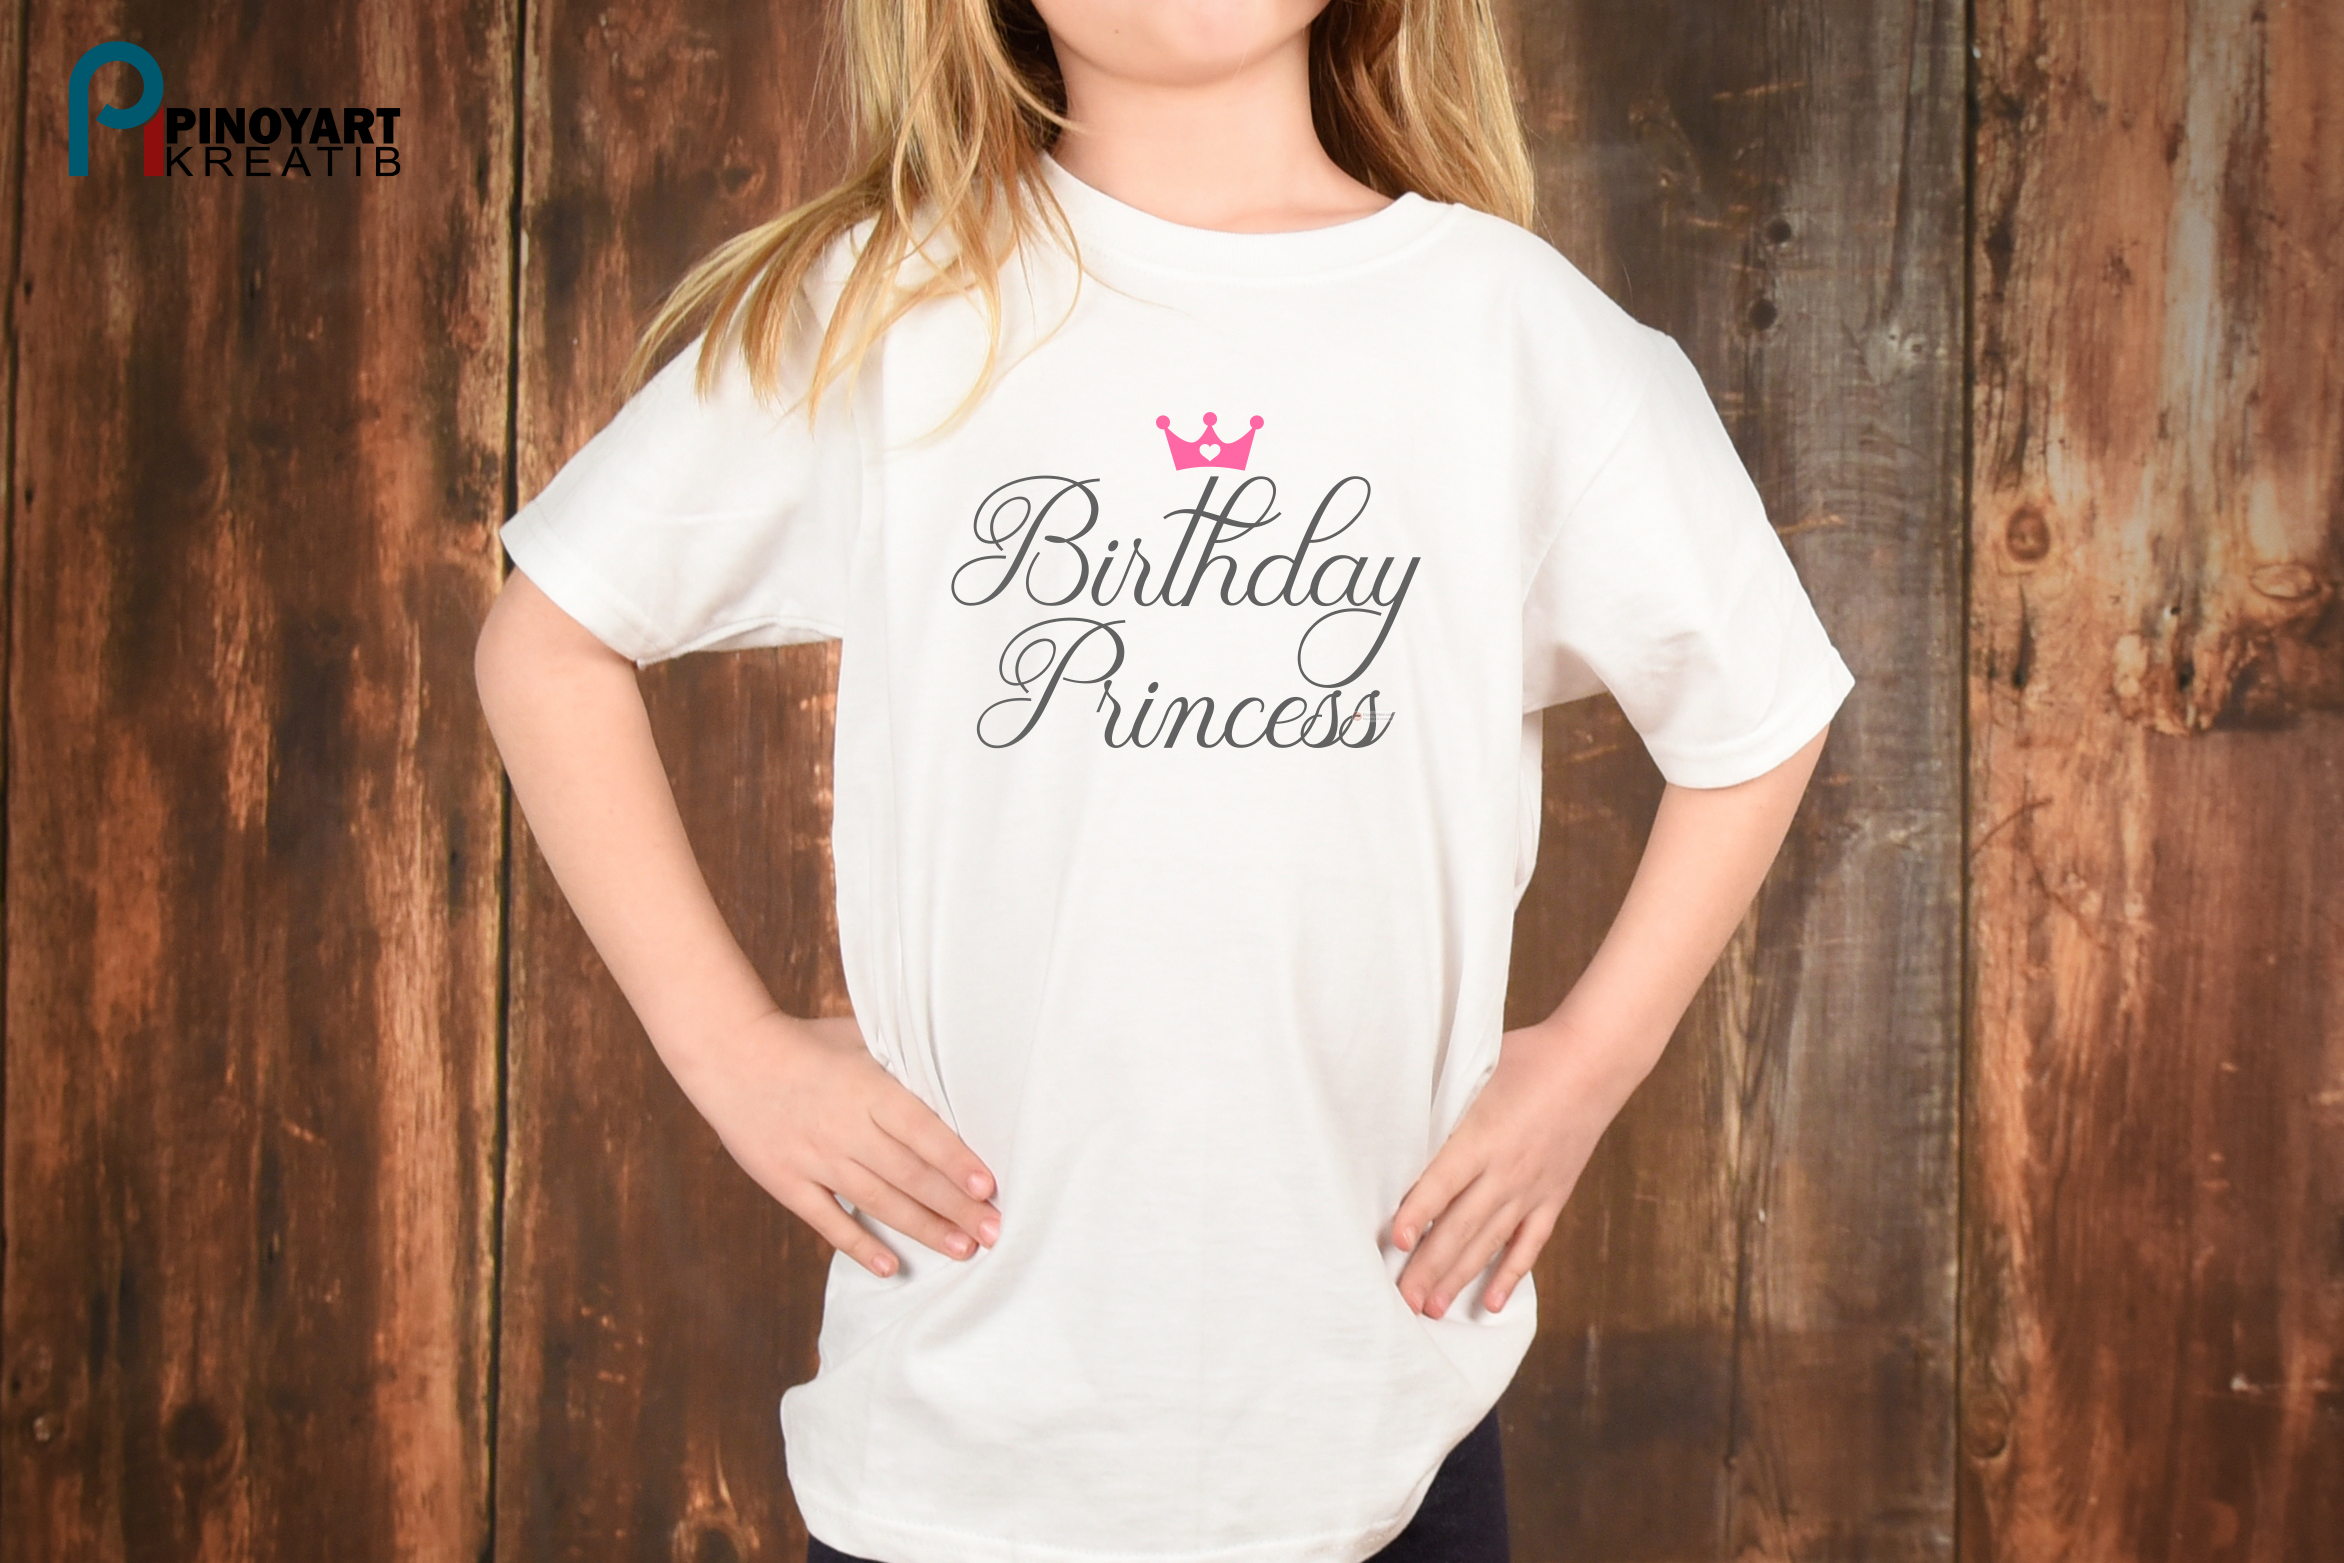 Download Birthday Princess svg - a birthday svg vector file